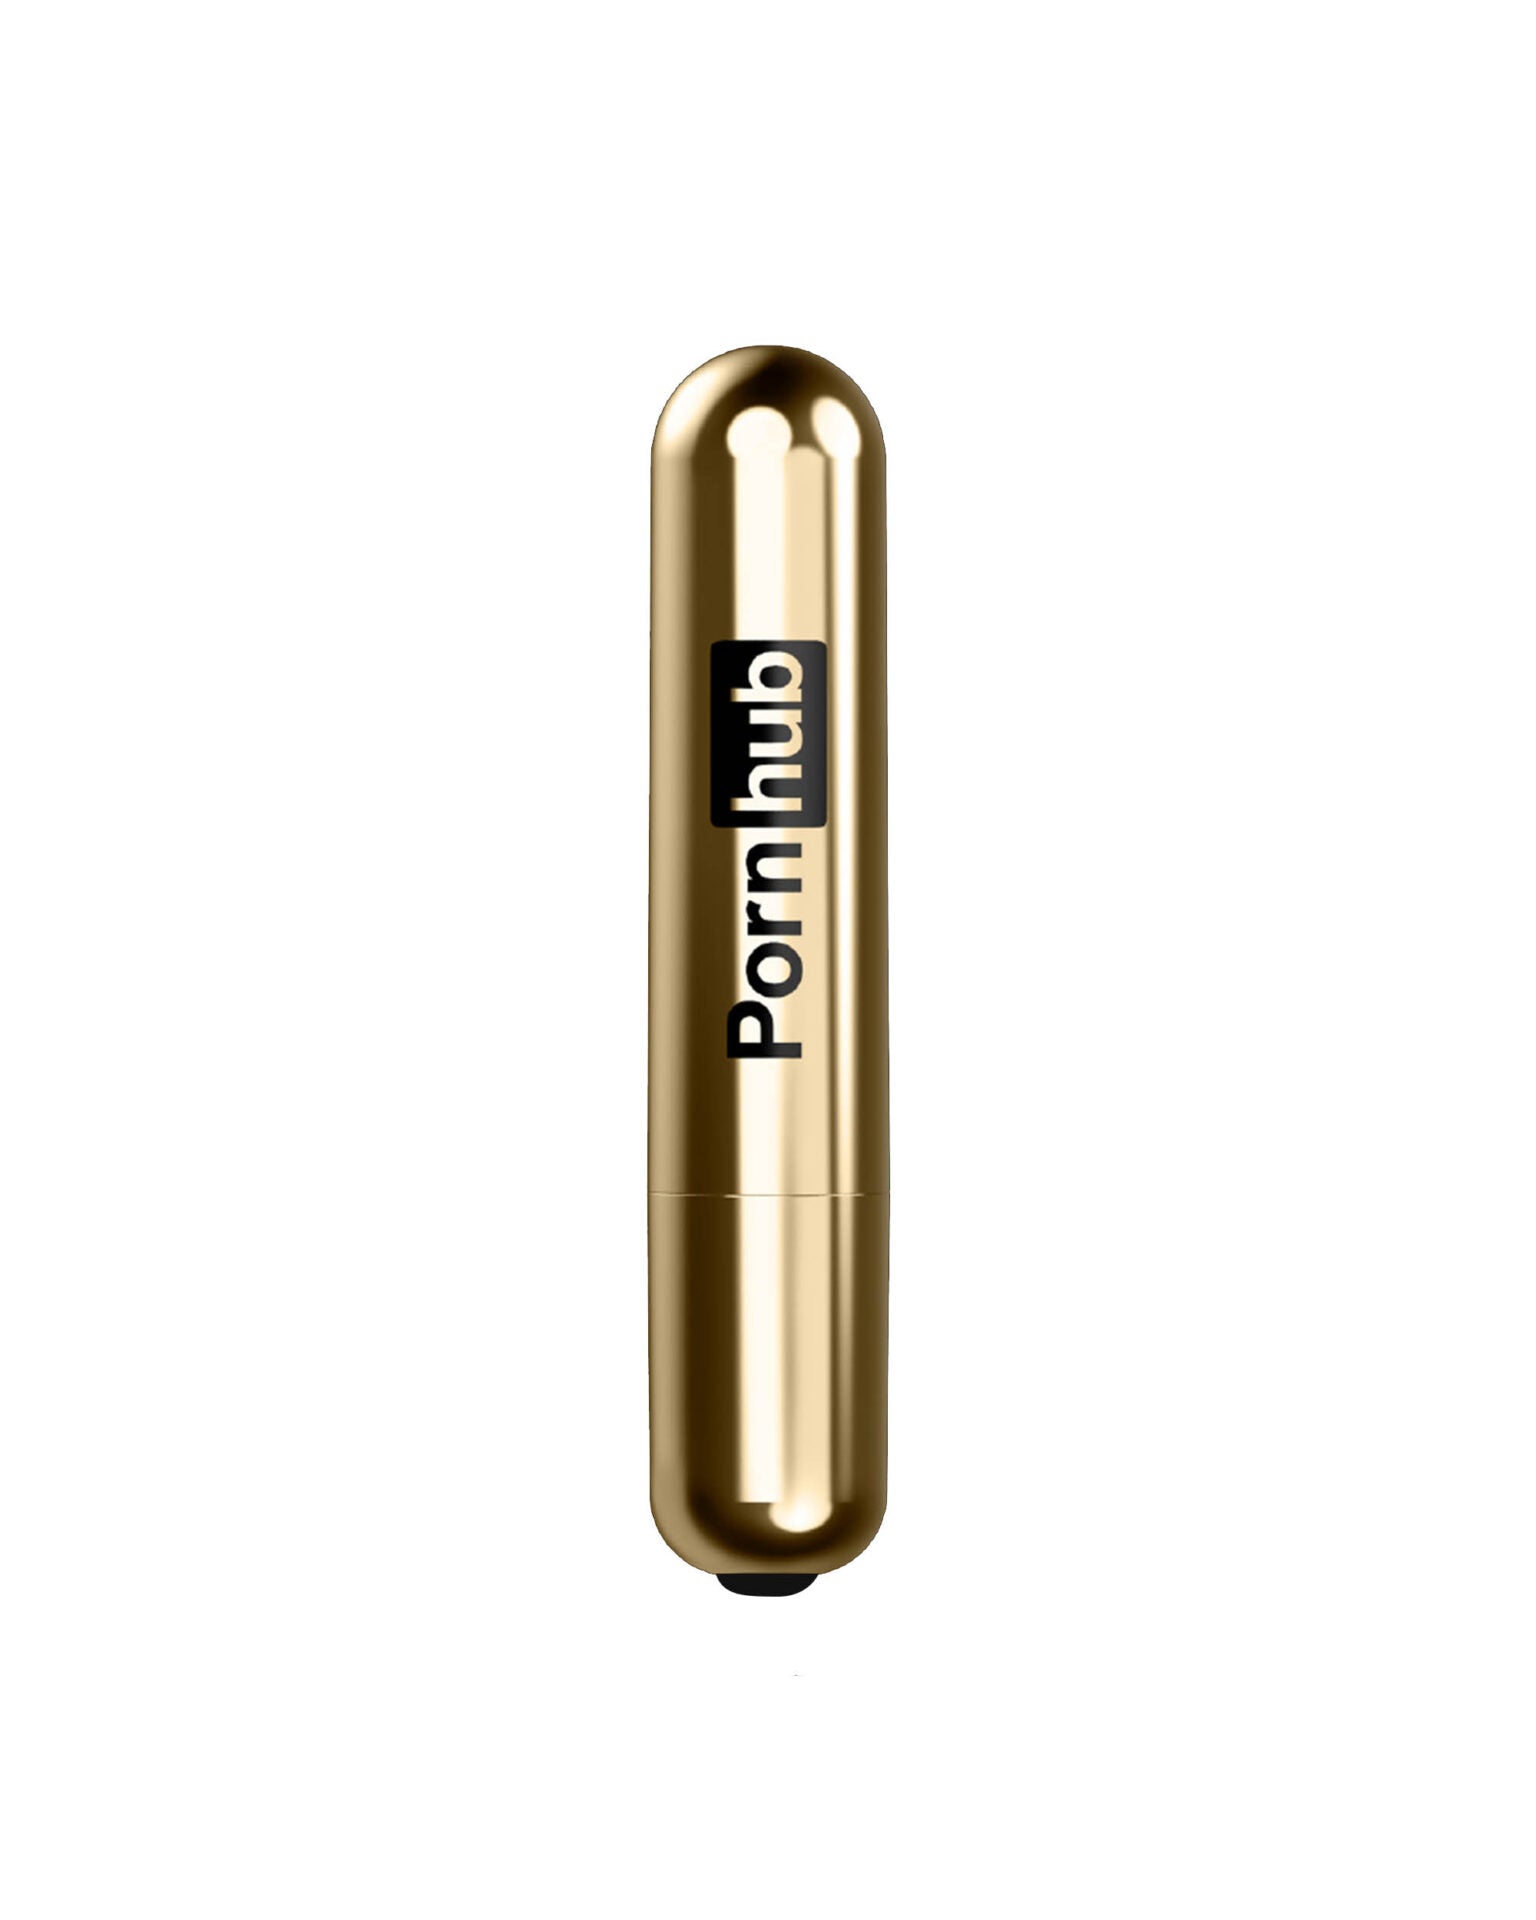 Pornhub - Bullet Vibrating & Rechargeable